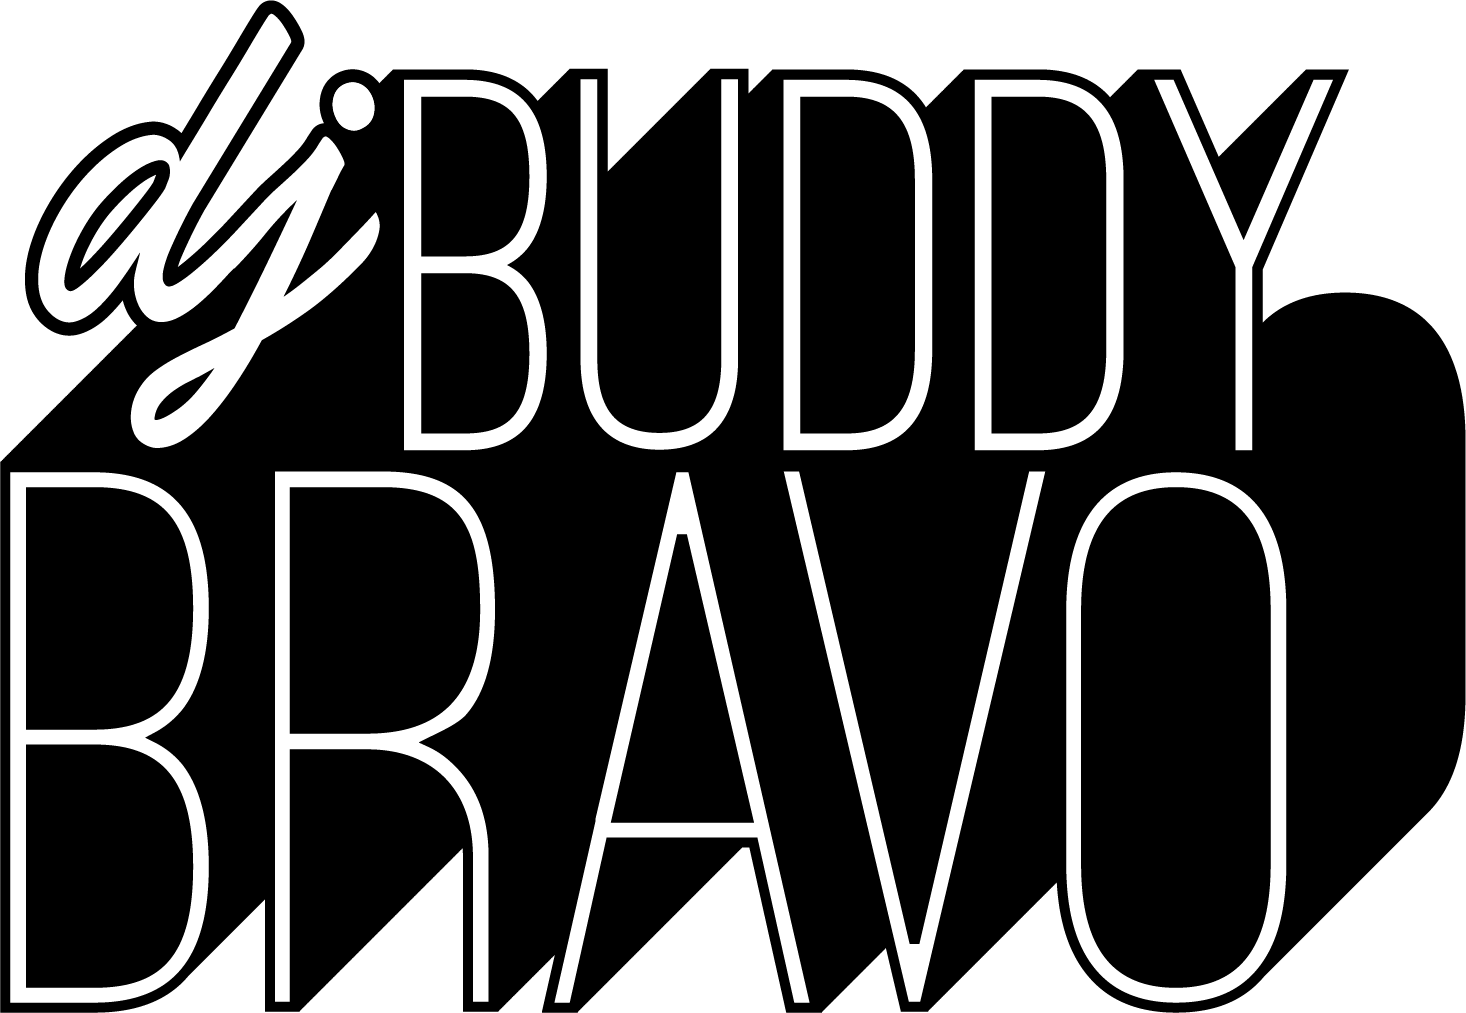 Buddy Bravo